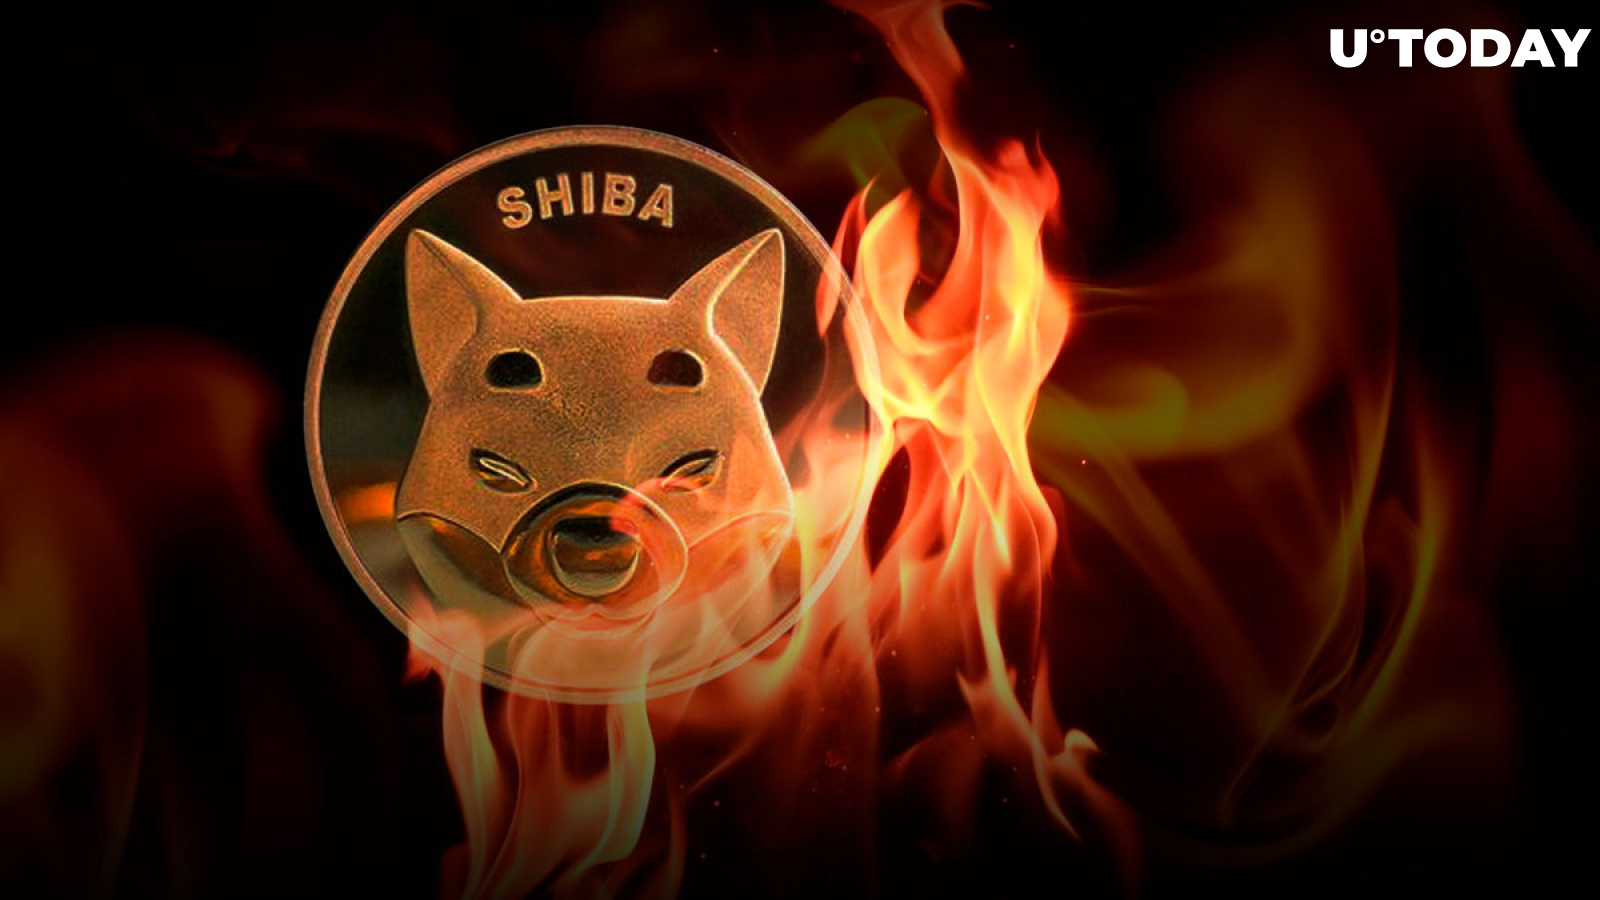 More Than Half Billion SHIB Burned in Past Week as Shiba Inu Returns to Whales' Radar